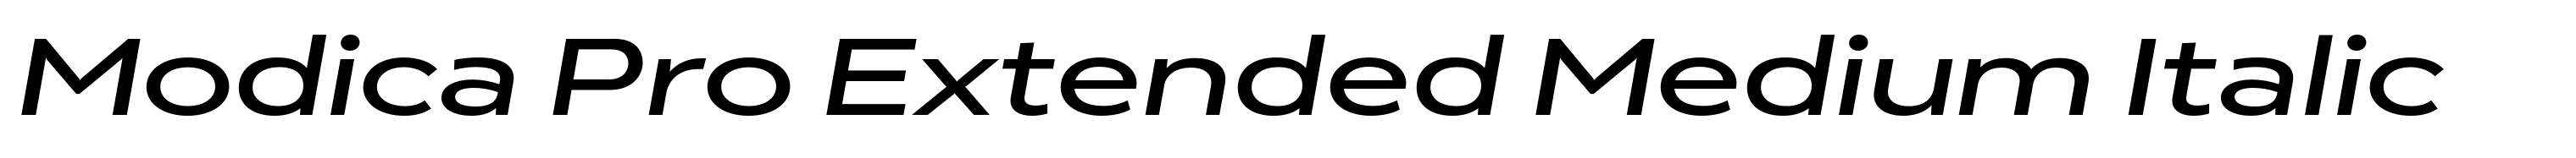 Modica Pro Extended Medium Italic